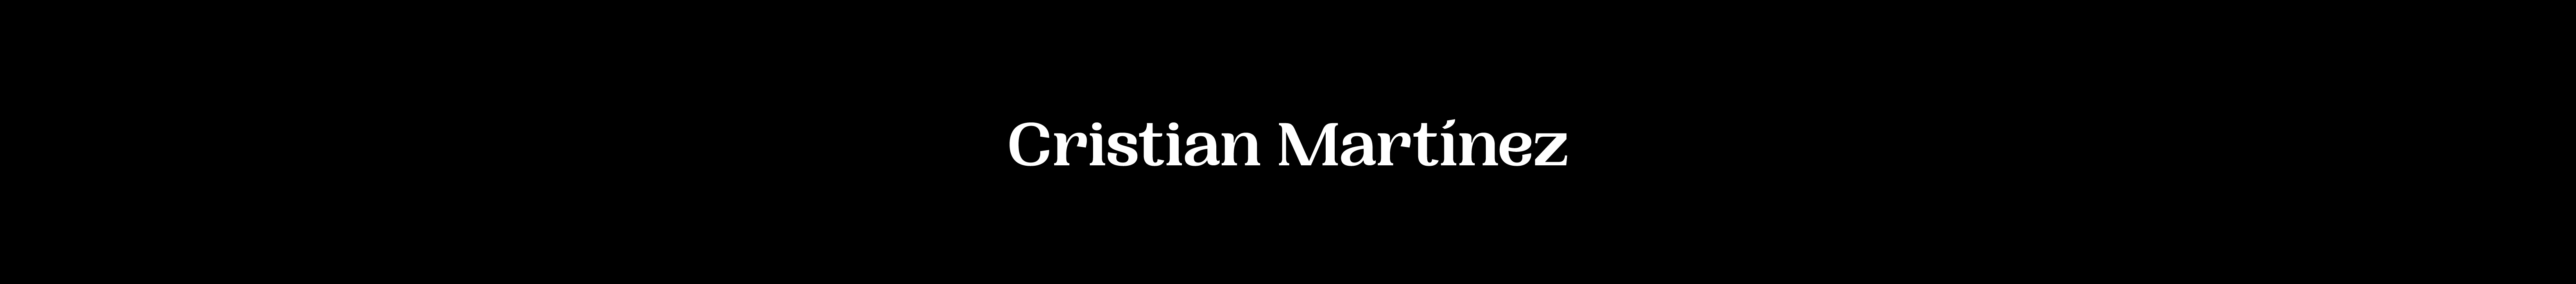 Cristian Martínez's profile banner